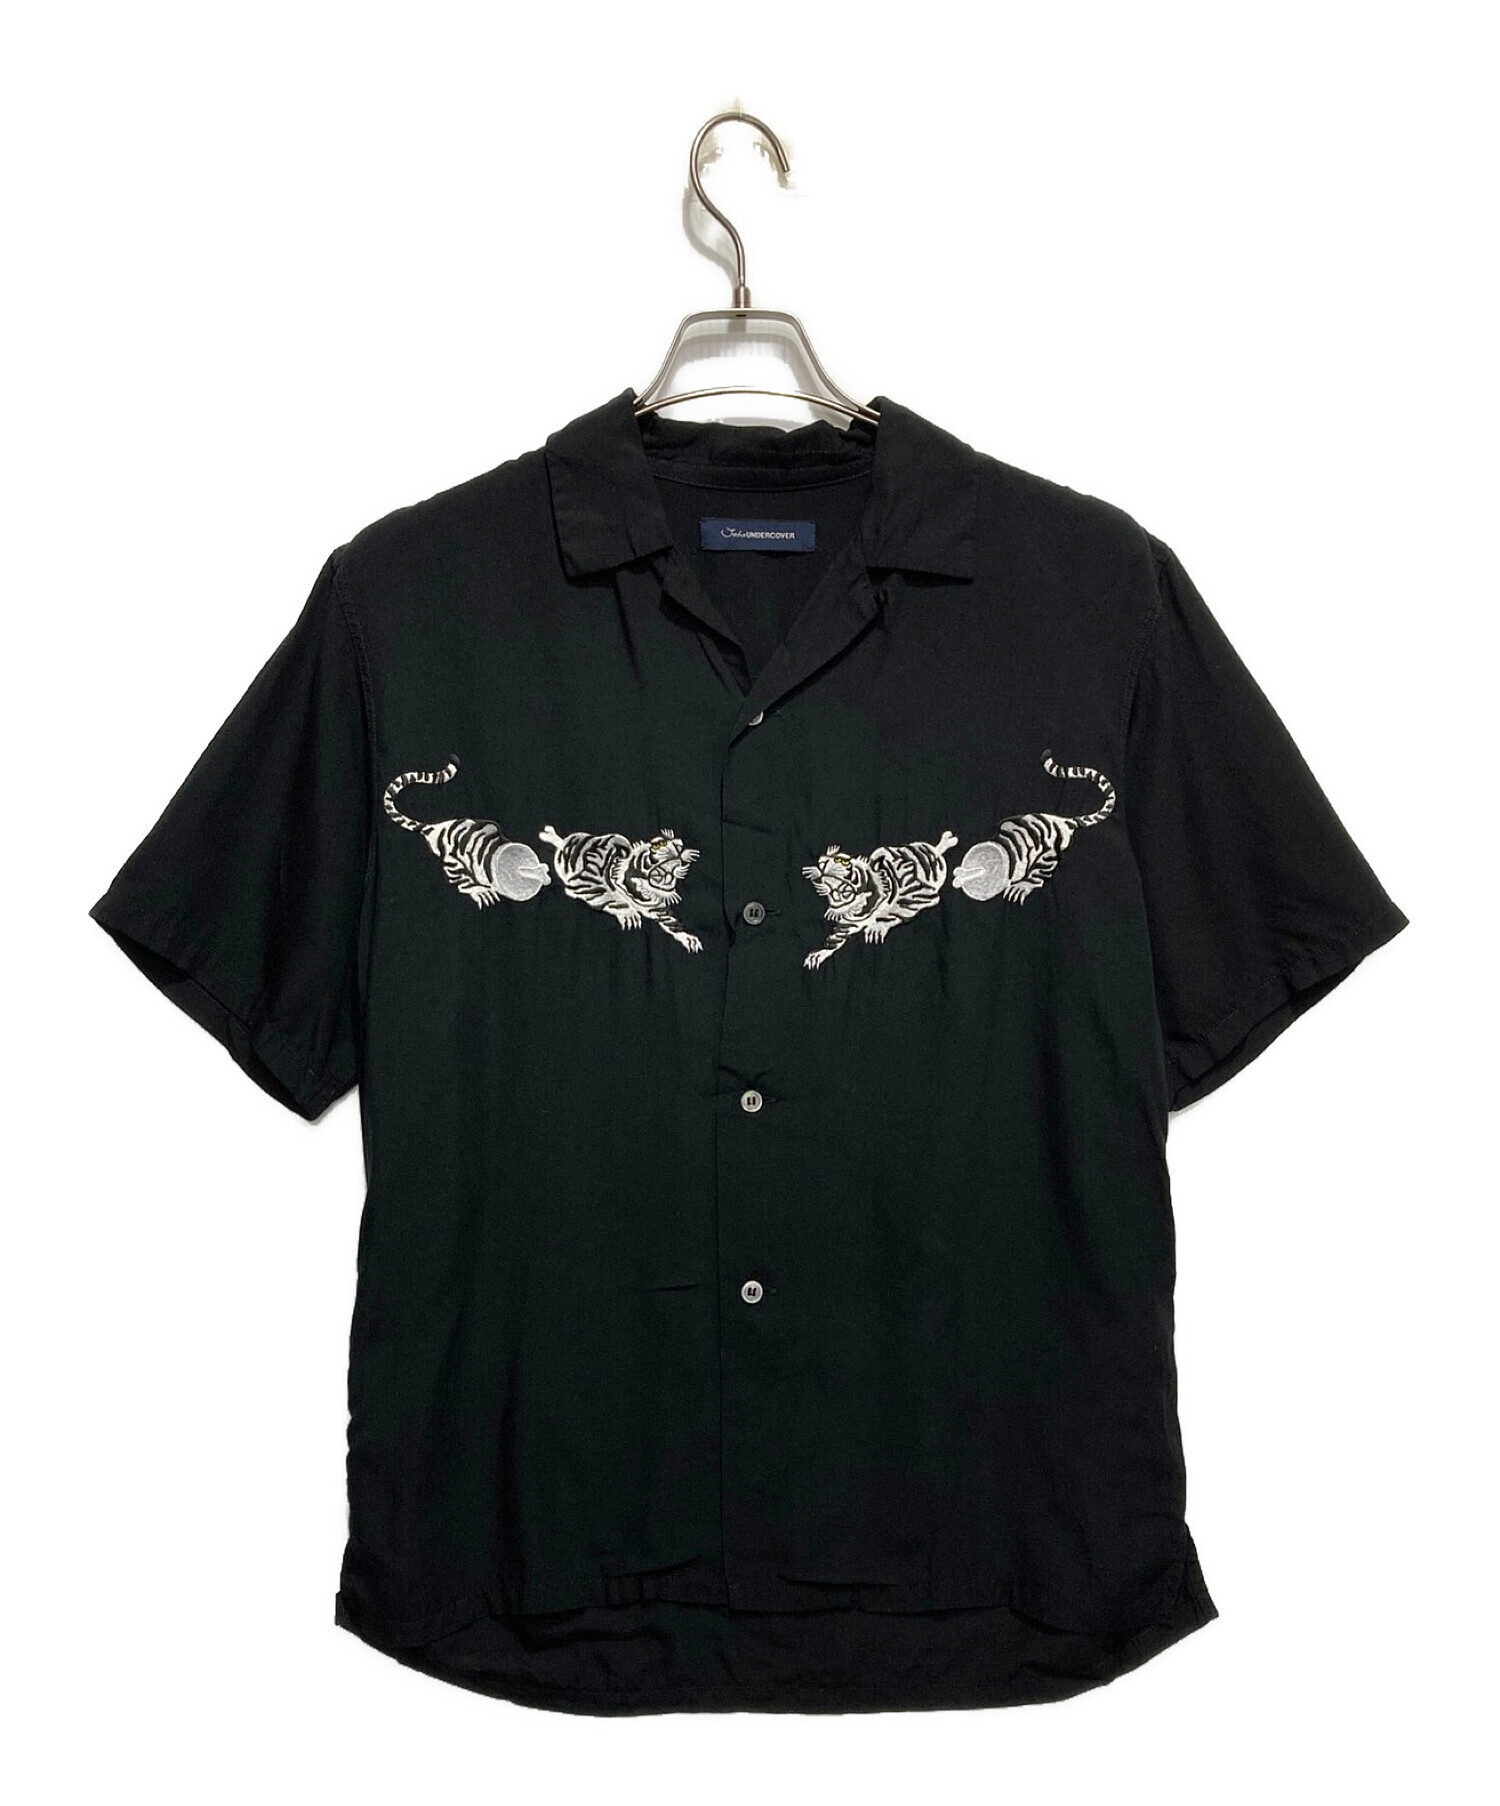 JohnUNDERCOVER (ジョンアンダーカバー) タイガー刺繍オープンカラーシャツ ブラック サイズ:2